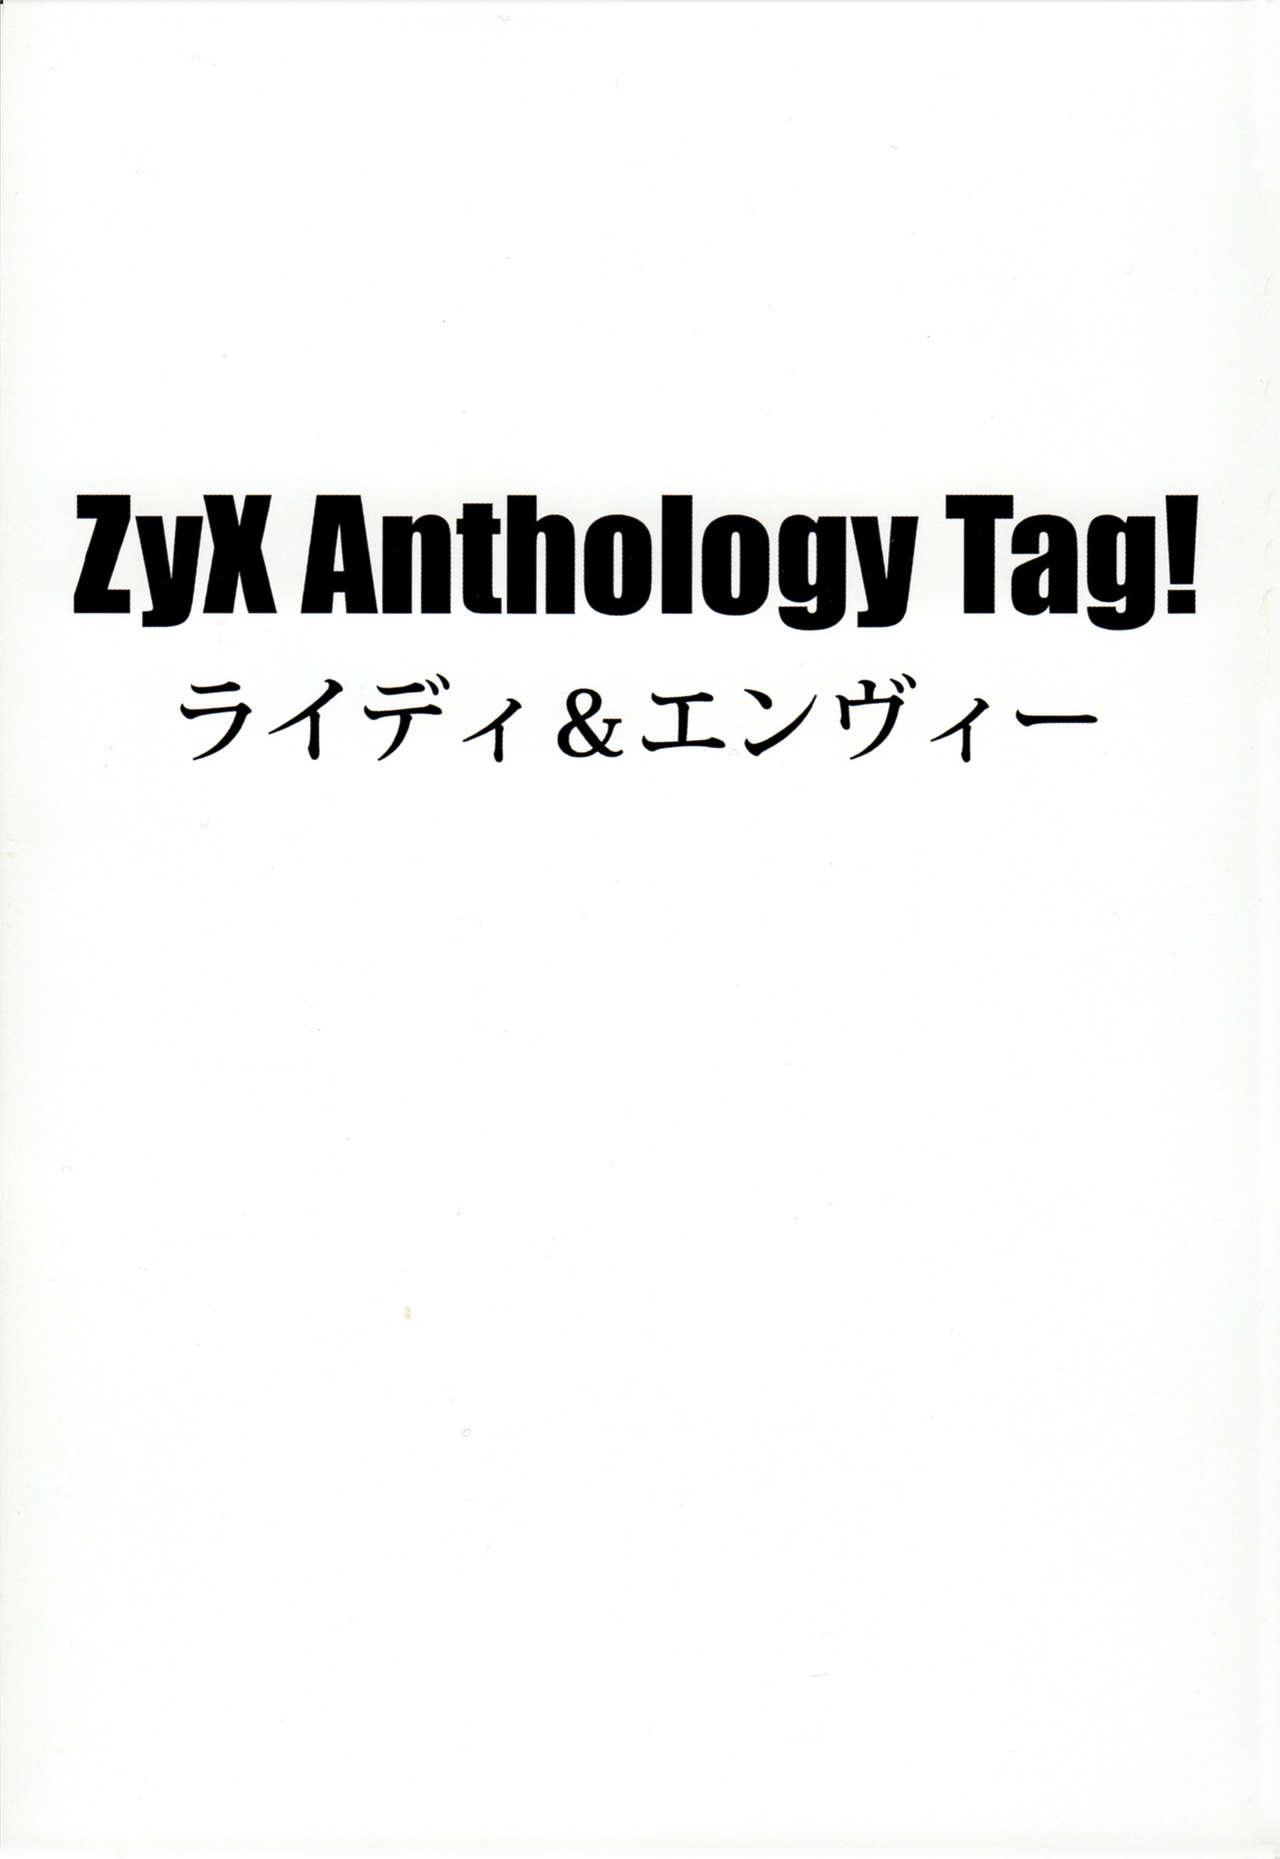 ZyX Anthology Tag! Raidy & Envy 5